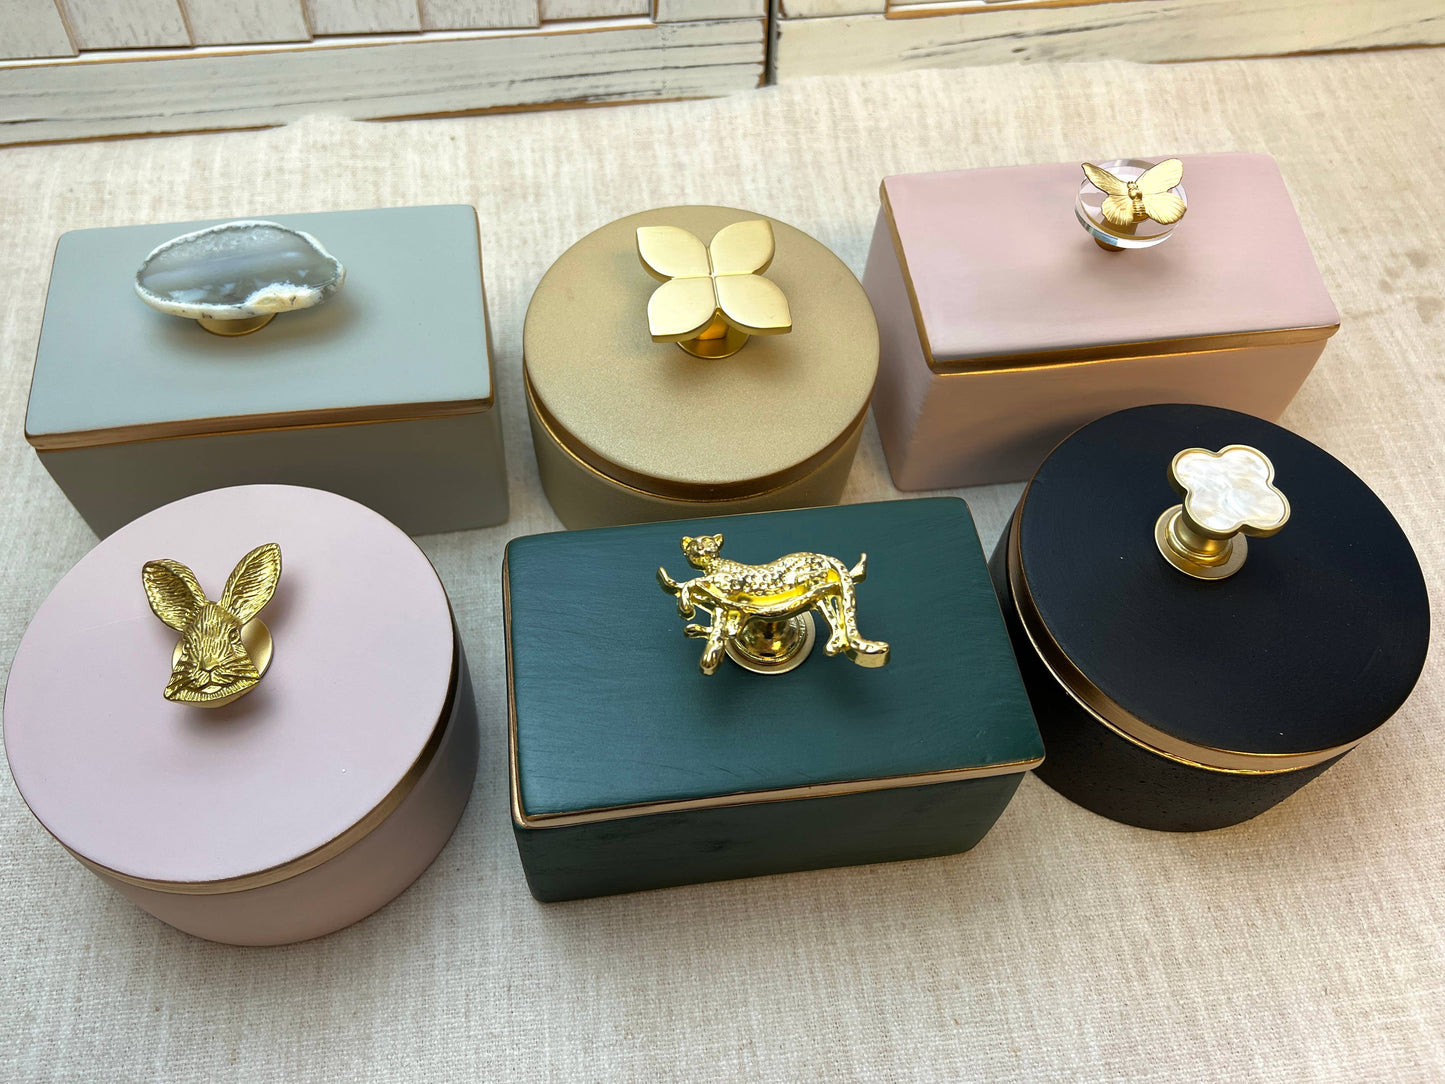 Ceramic box with decorative knob